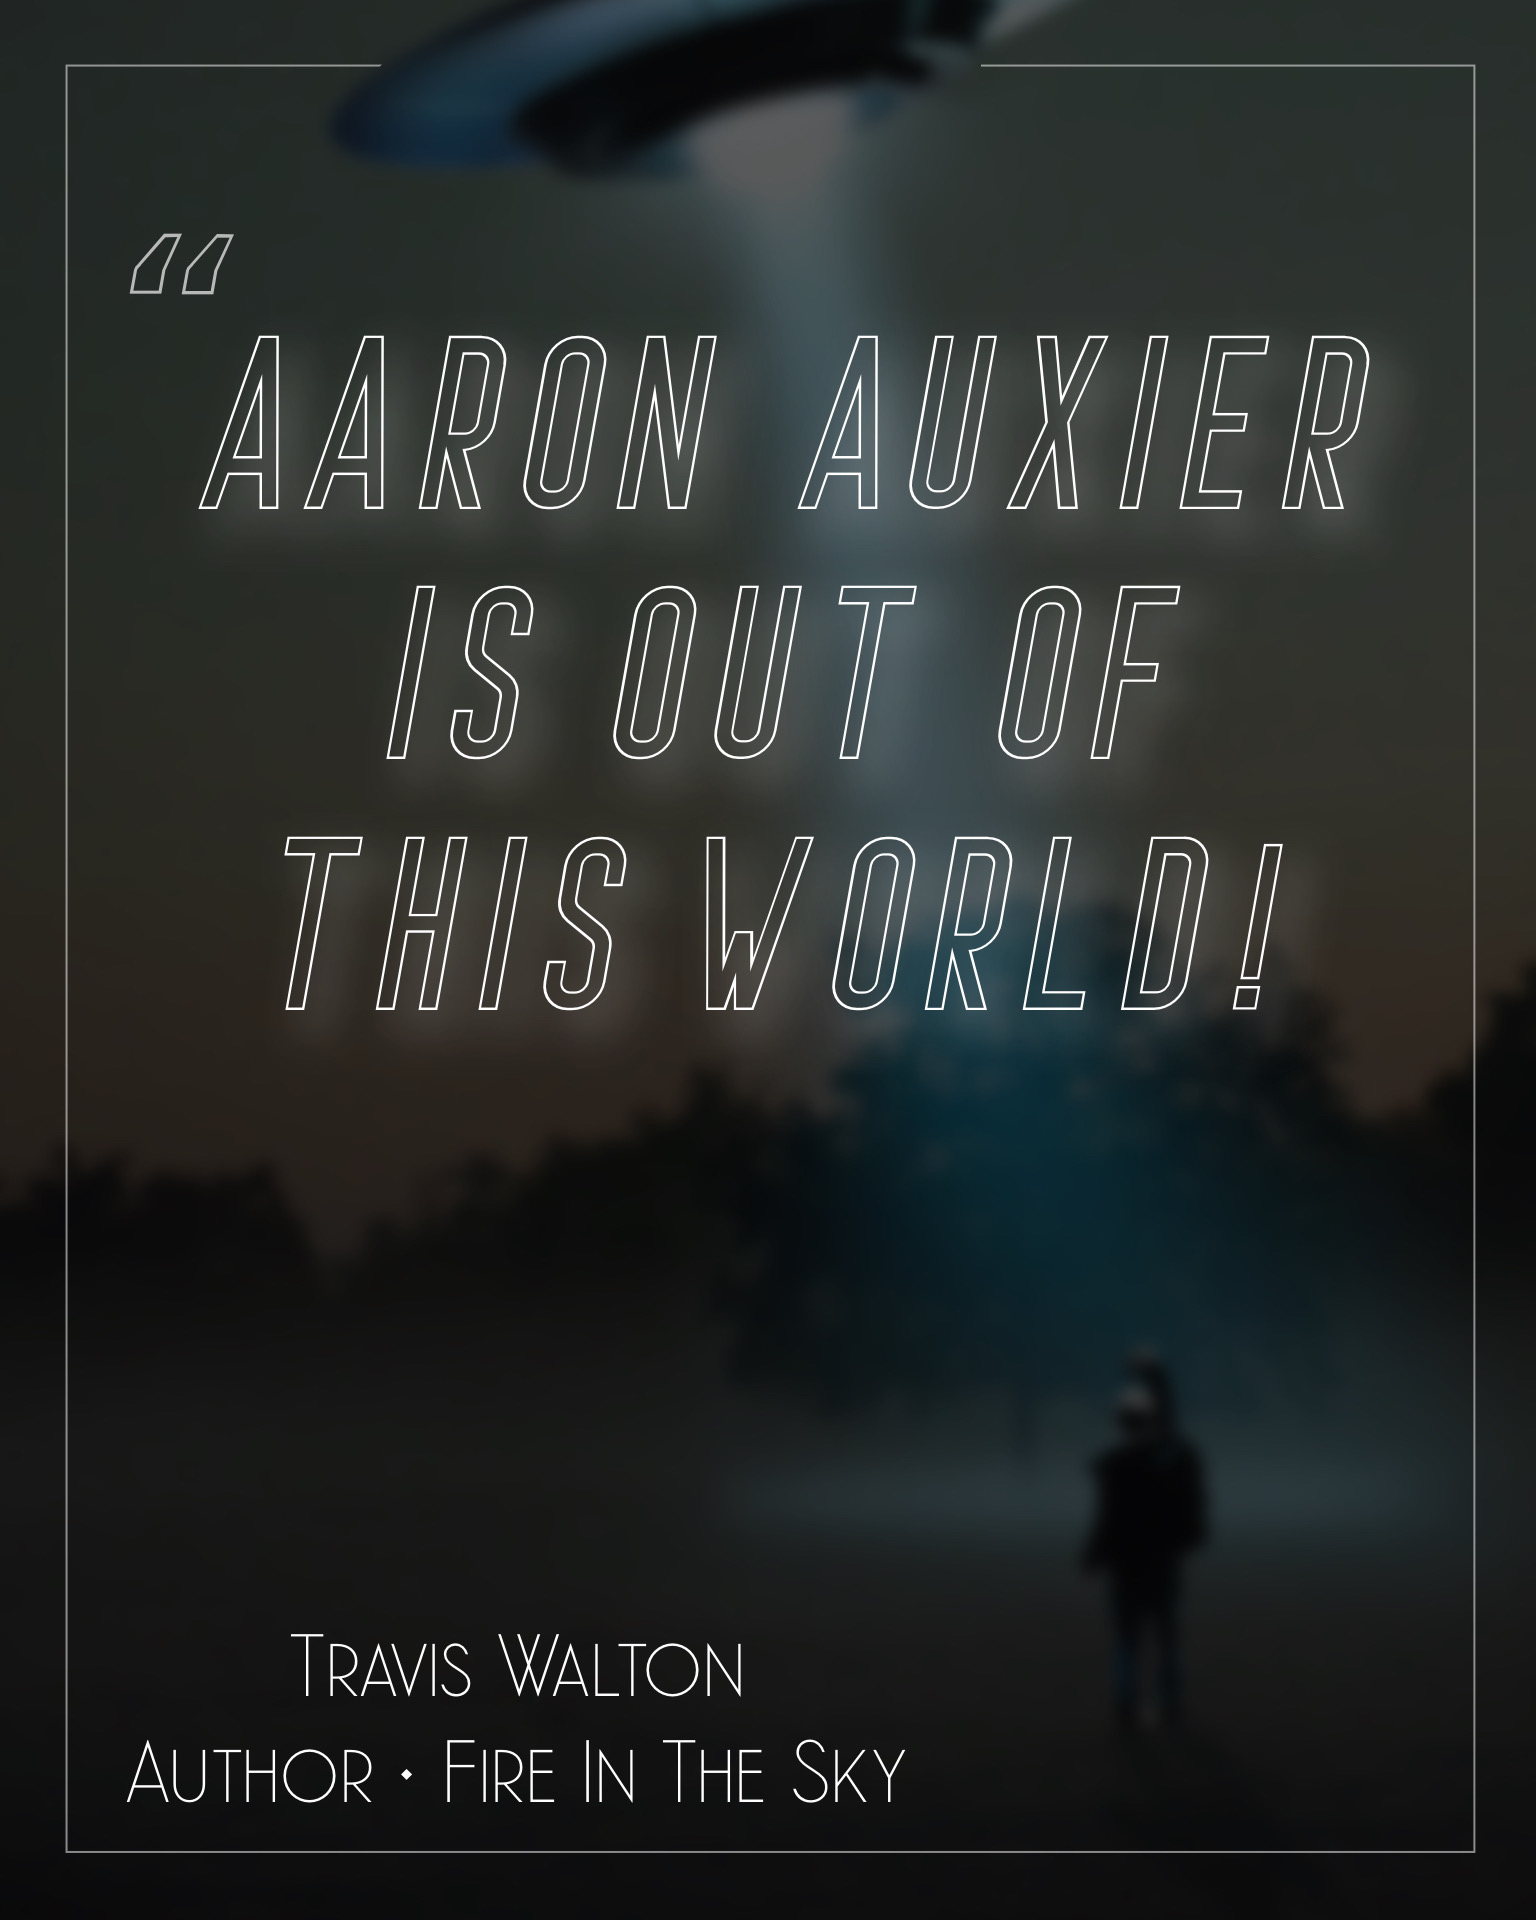 Endorsement for Aaron Auxier.